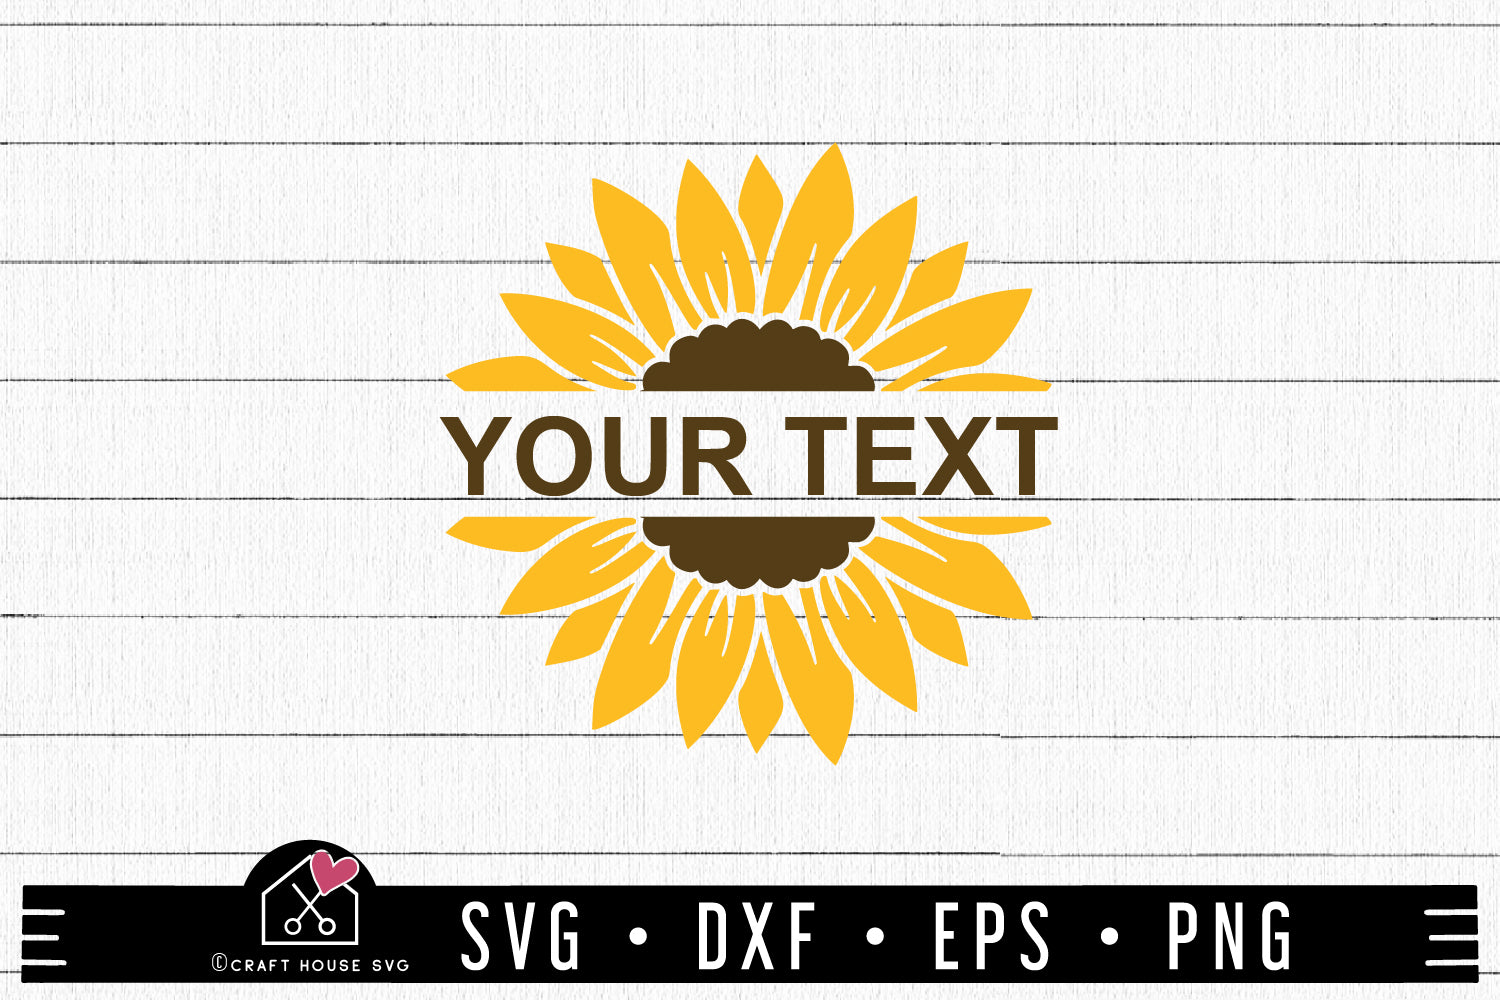 FREE Sunflower Split Monogram SVG cut file - Craft House SVG